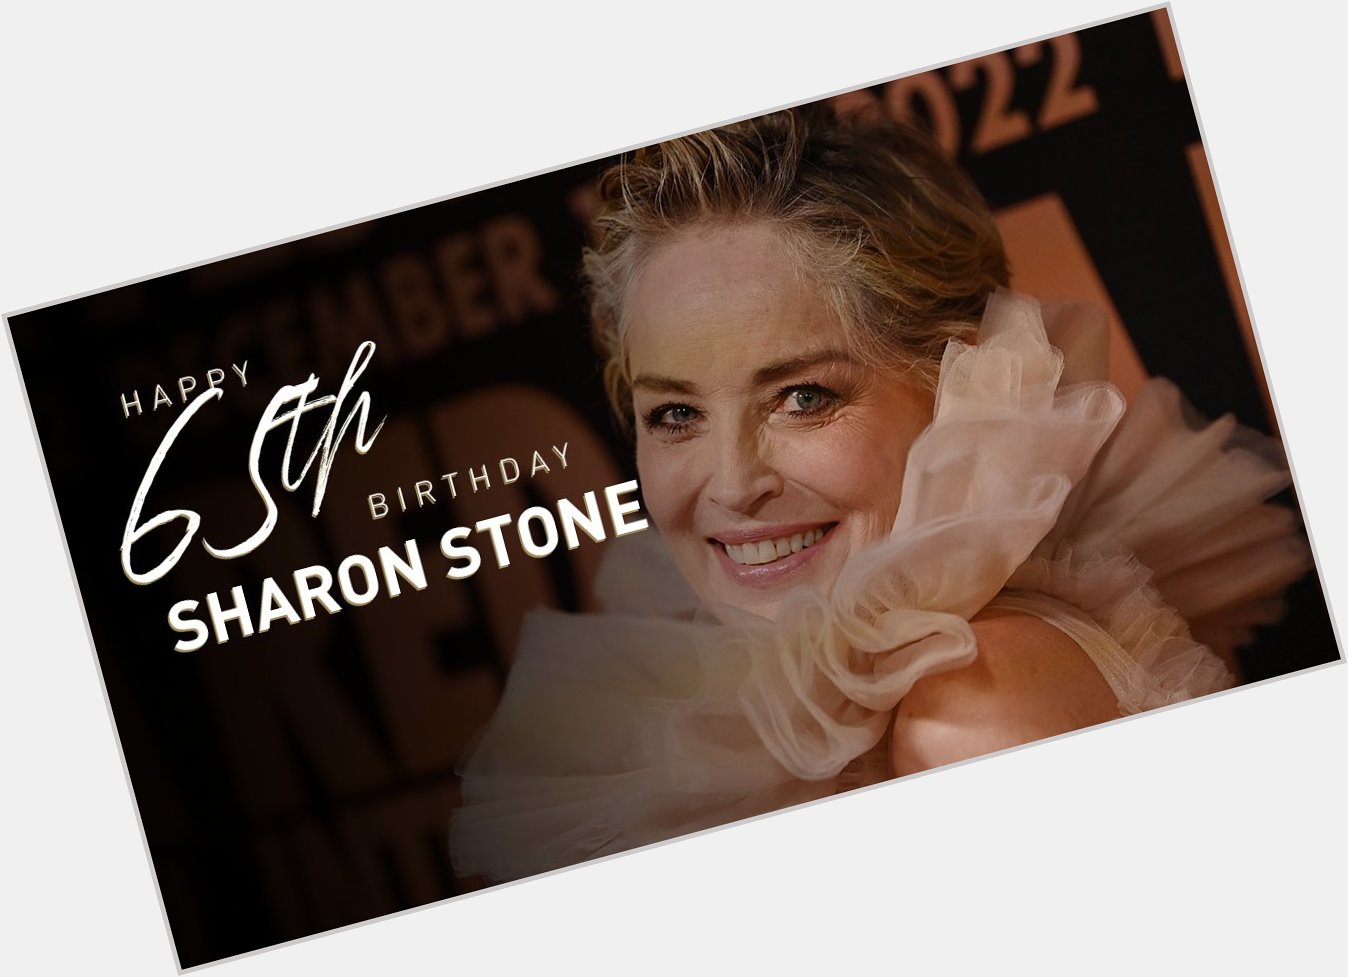 Happy 65th birthday Sharon Stone!

Read her tribute here:  